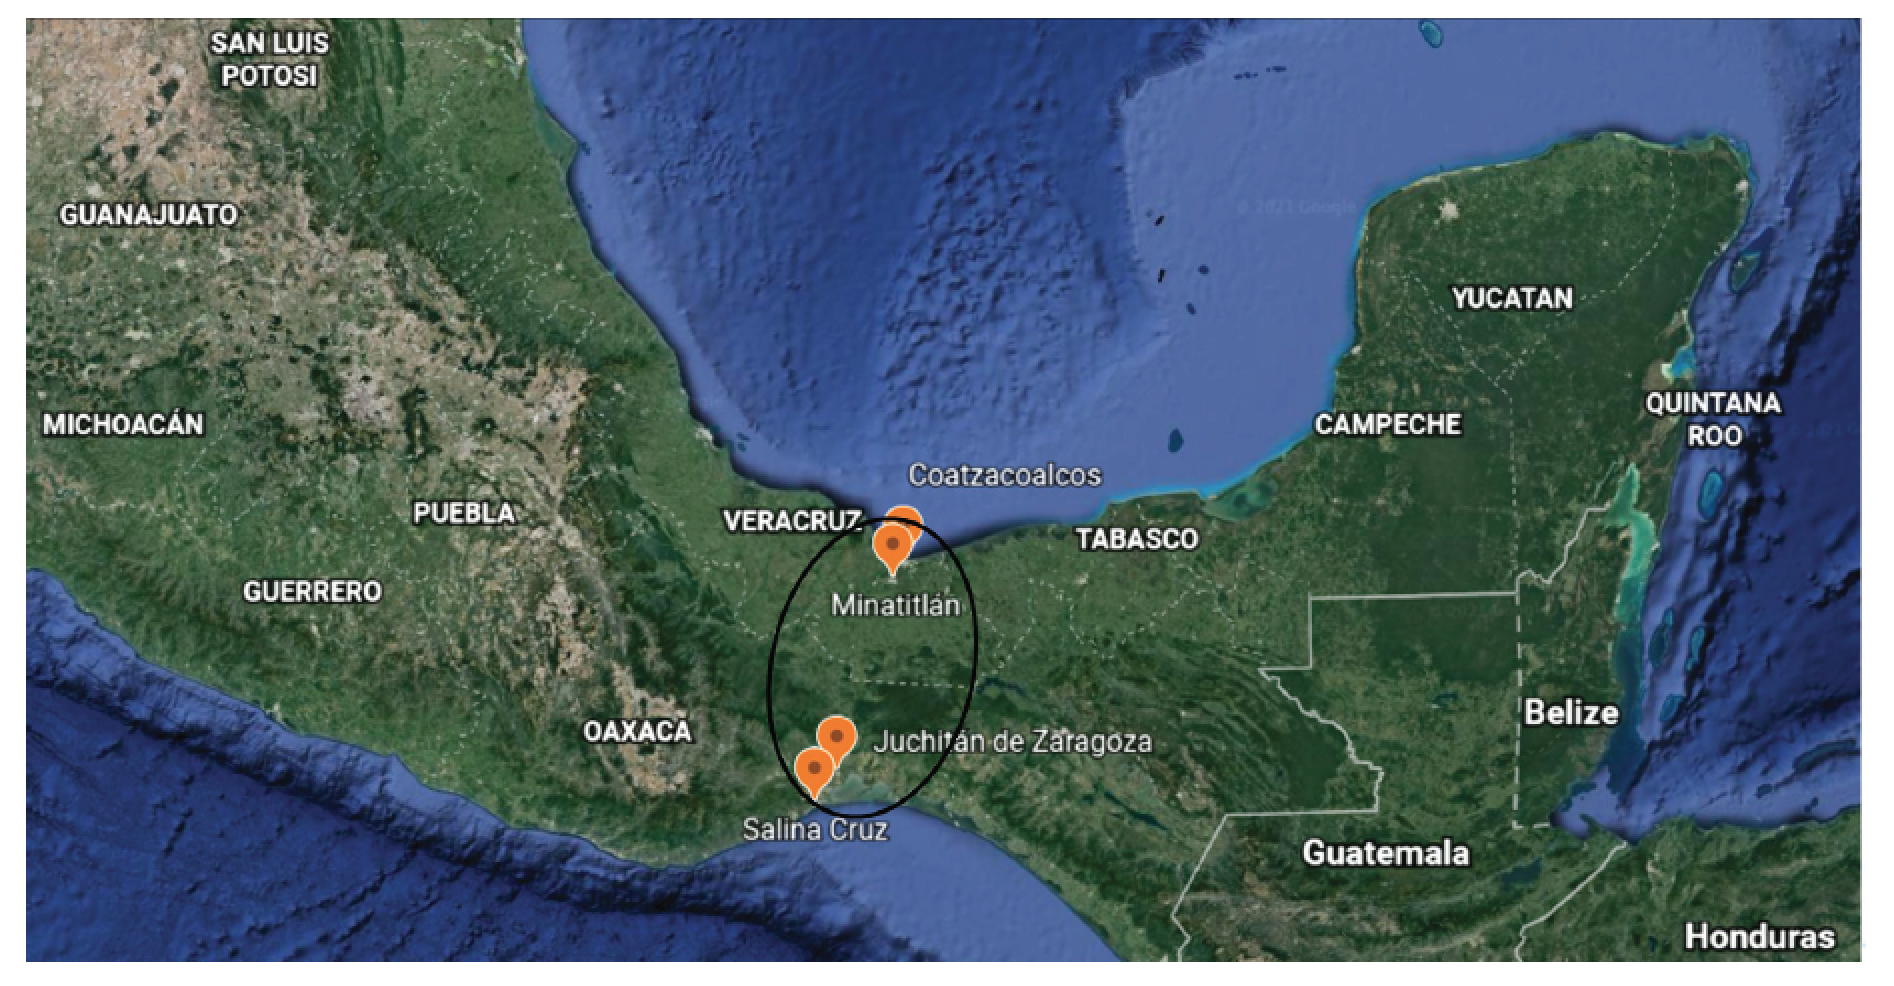 Google Earth image of the Yucatan peninsula. 